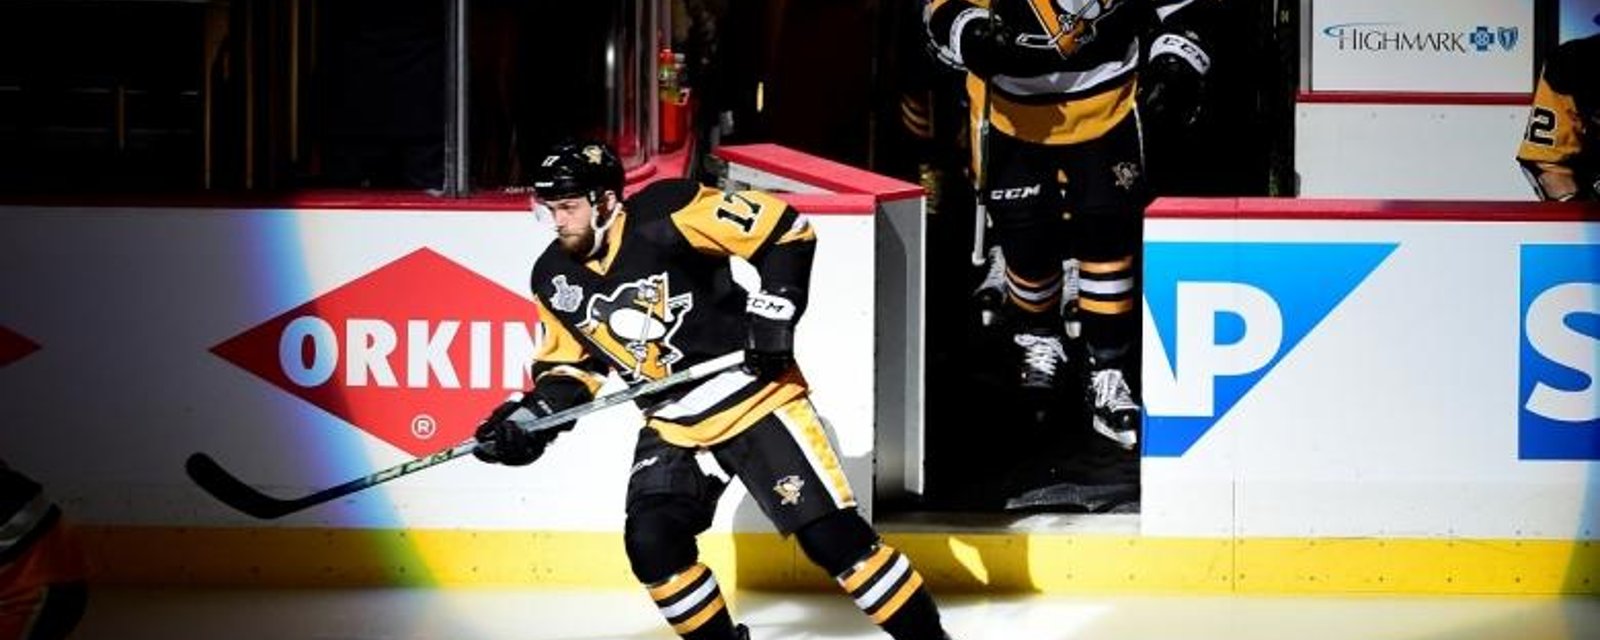 Major update on Penguins injured rookie sensation Bryan Rust.